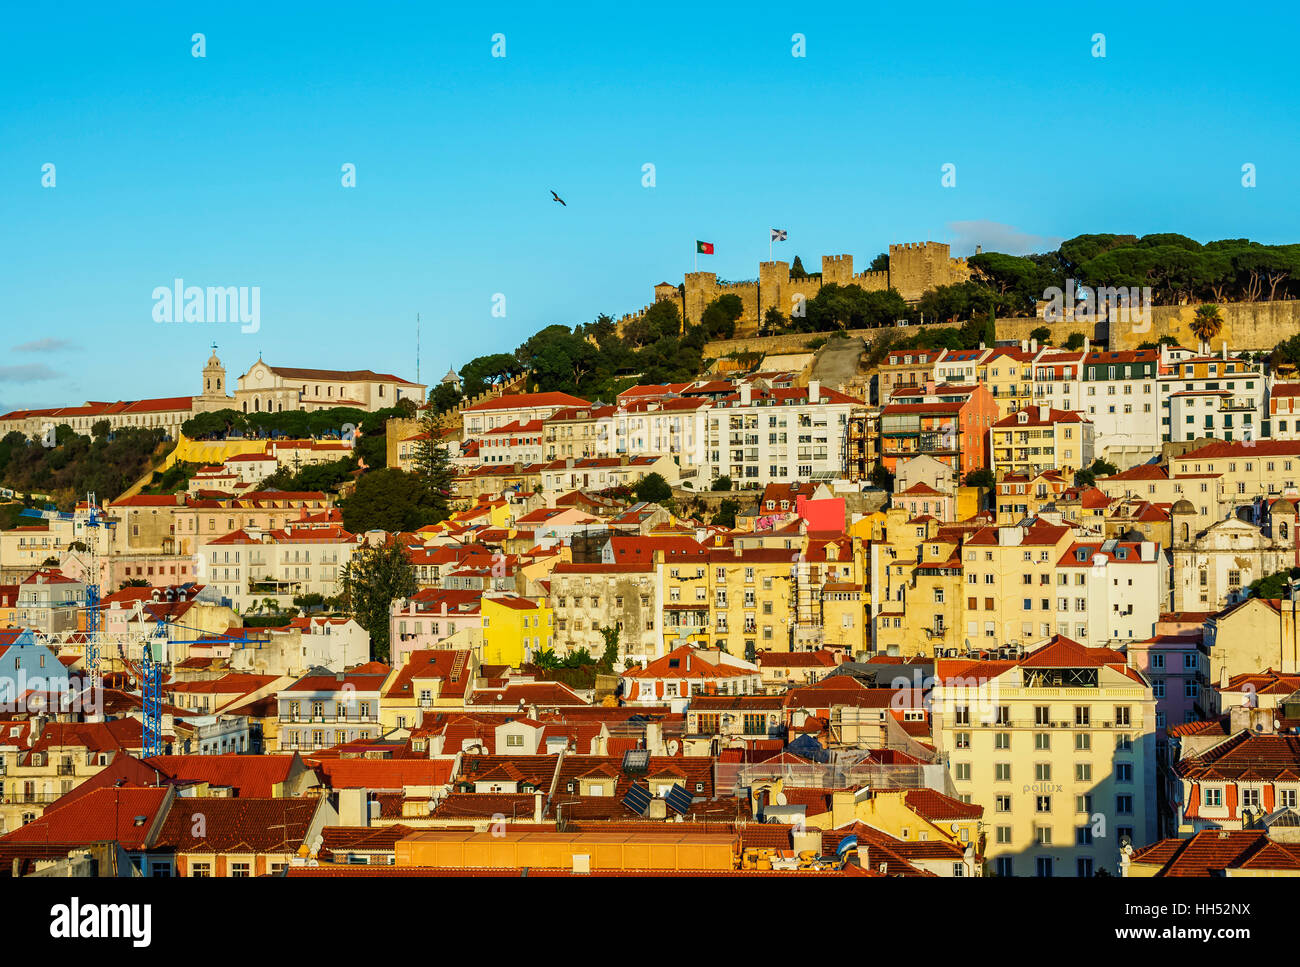 Portugal, Lisbon, Miradouro de Santa Justa, View towards the Sao Jorge Castle. Stock Photo